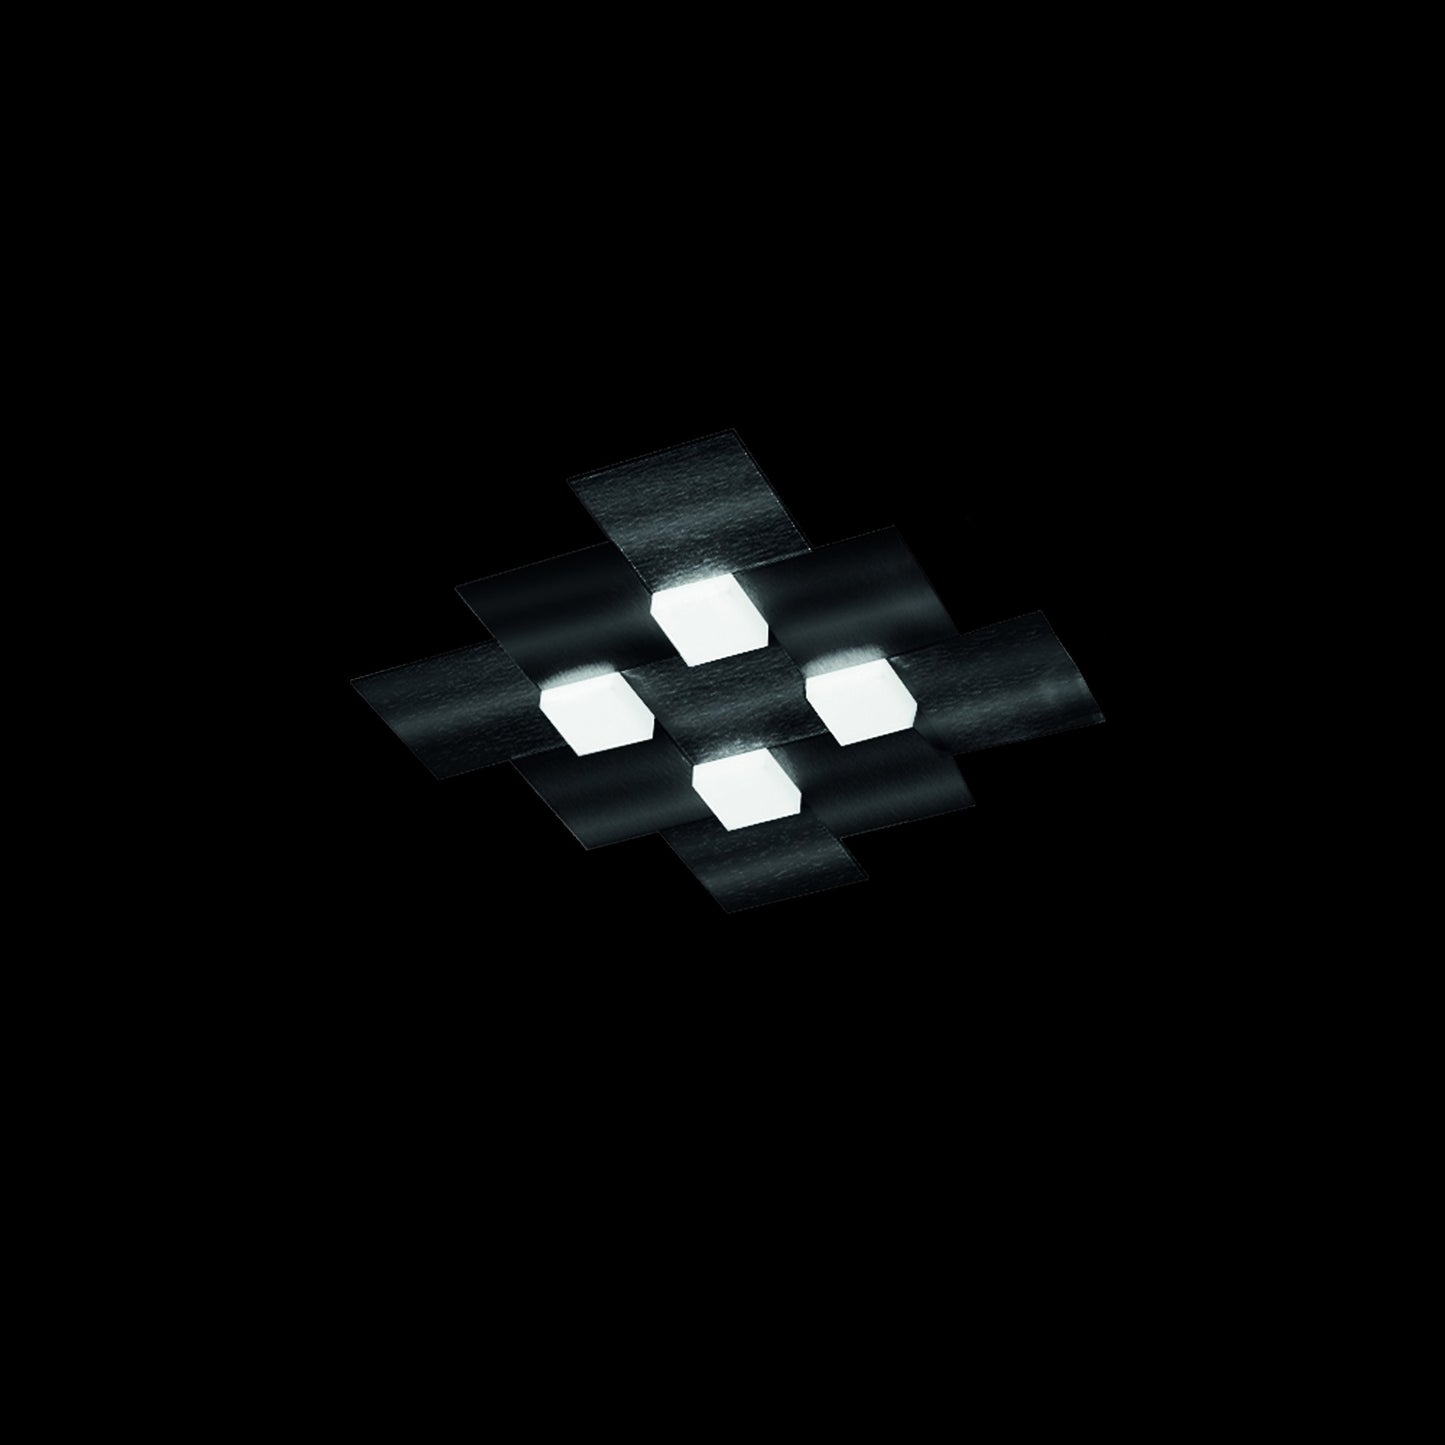 Grossmann CREO Four Lamp Square Ceiling Light - Colour Options